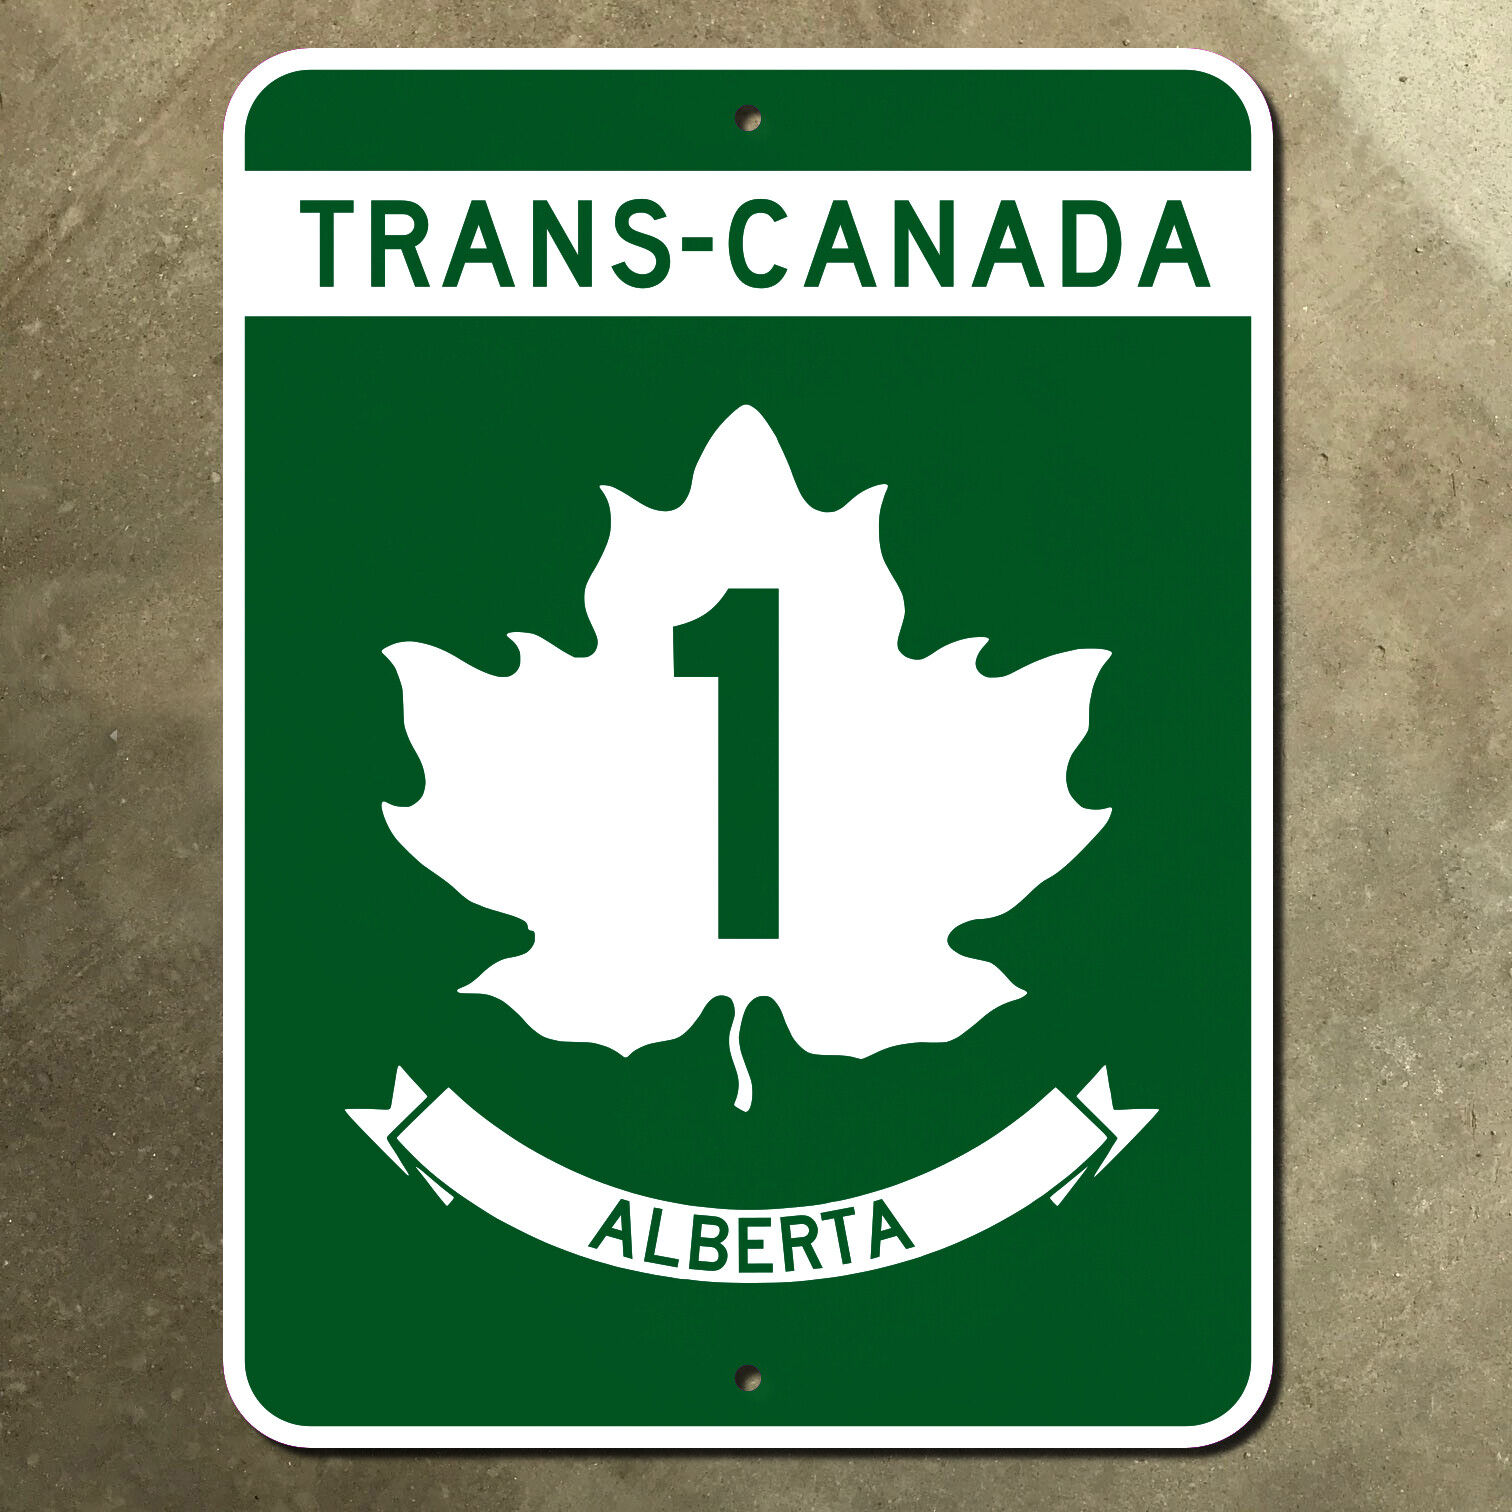 Canada Alberta Trans-Canada Highway 1 Calgary marker road sign 1980s 18x24